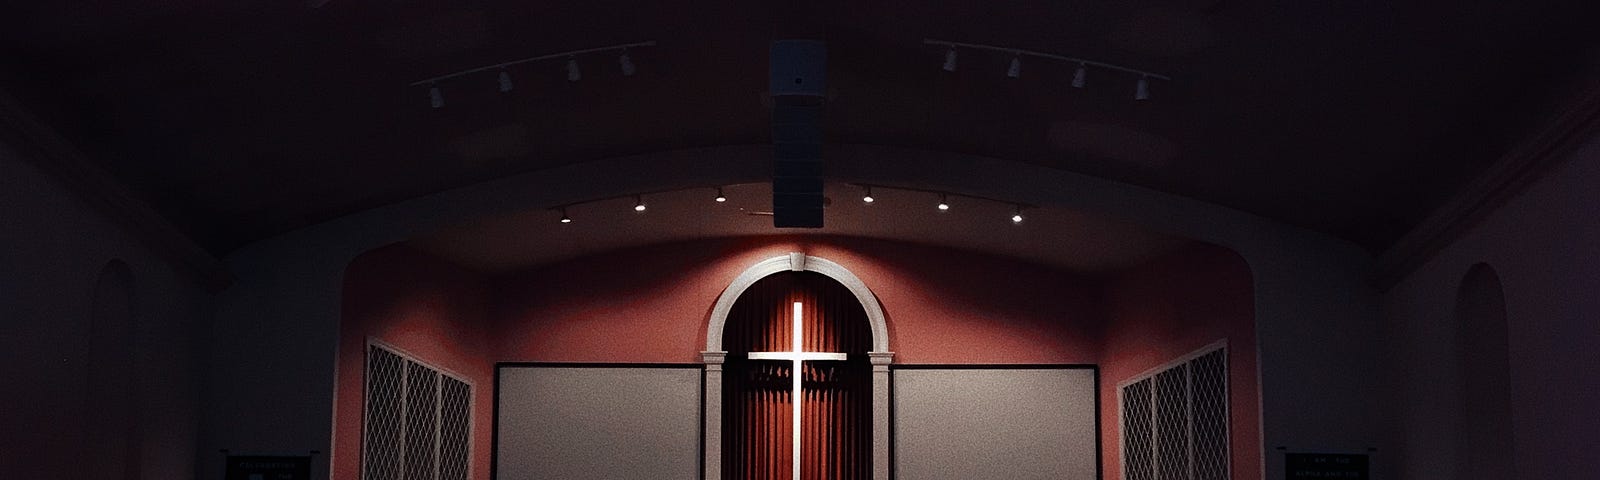 Inside a contemporary church